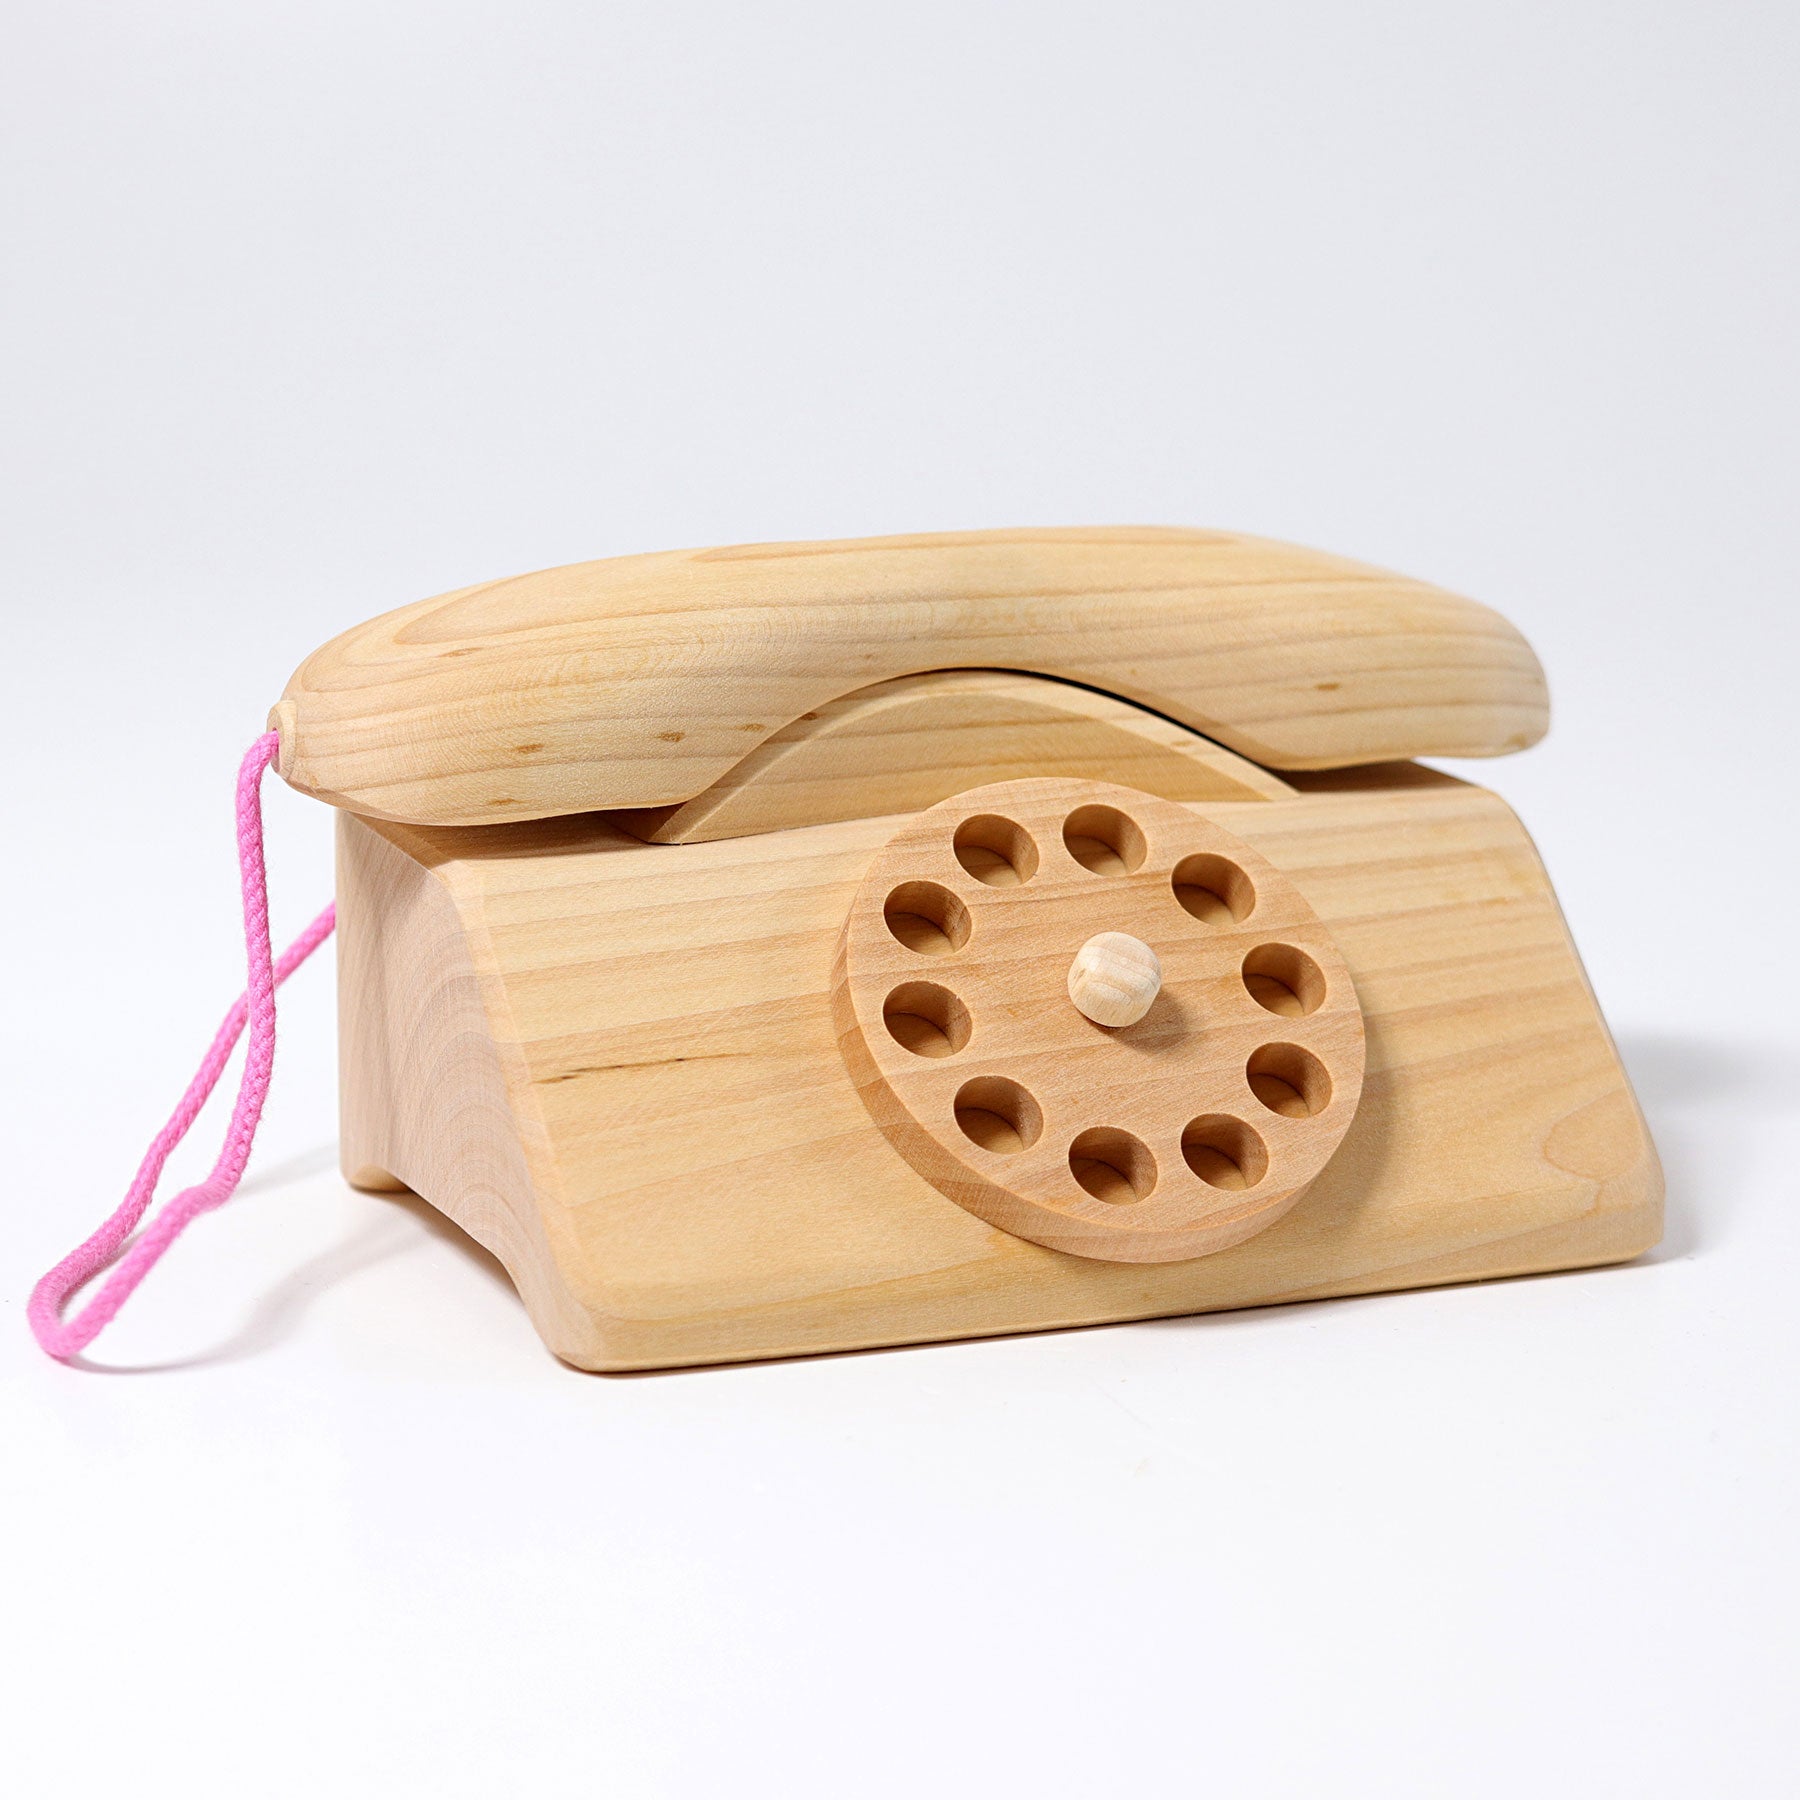 Grimm wooden Telephone